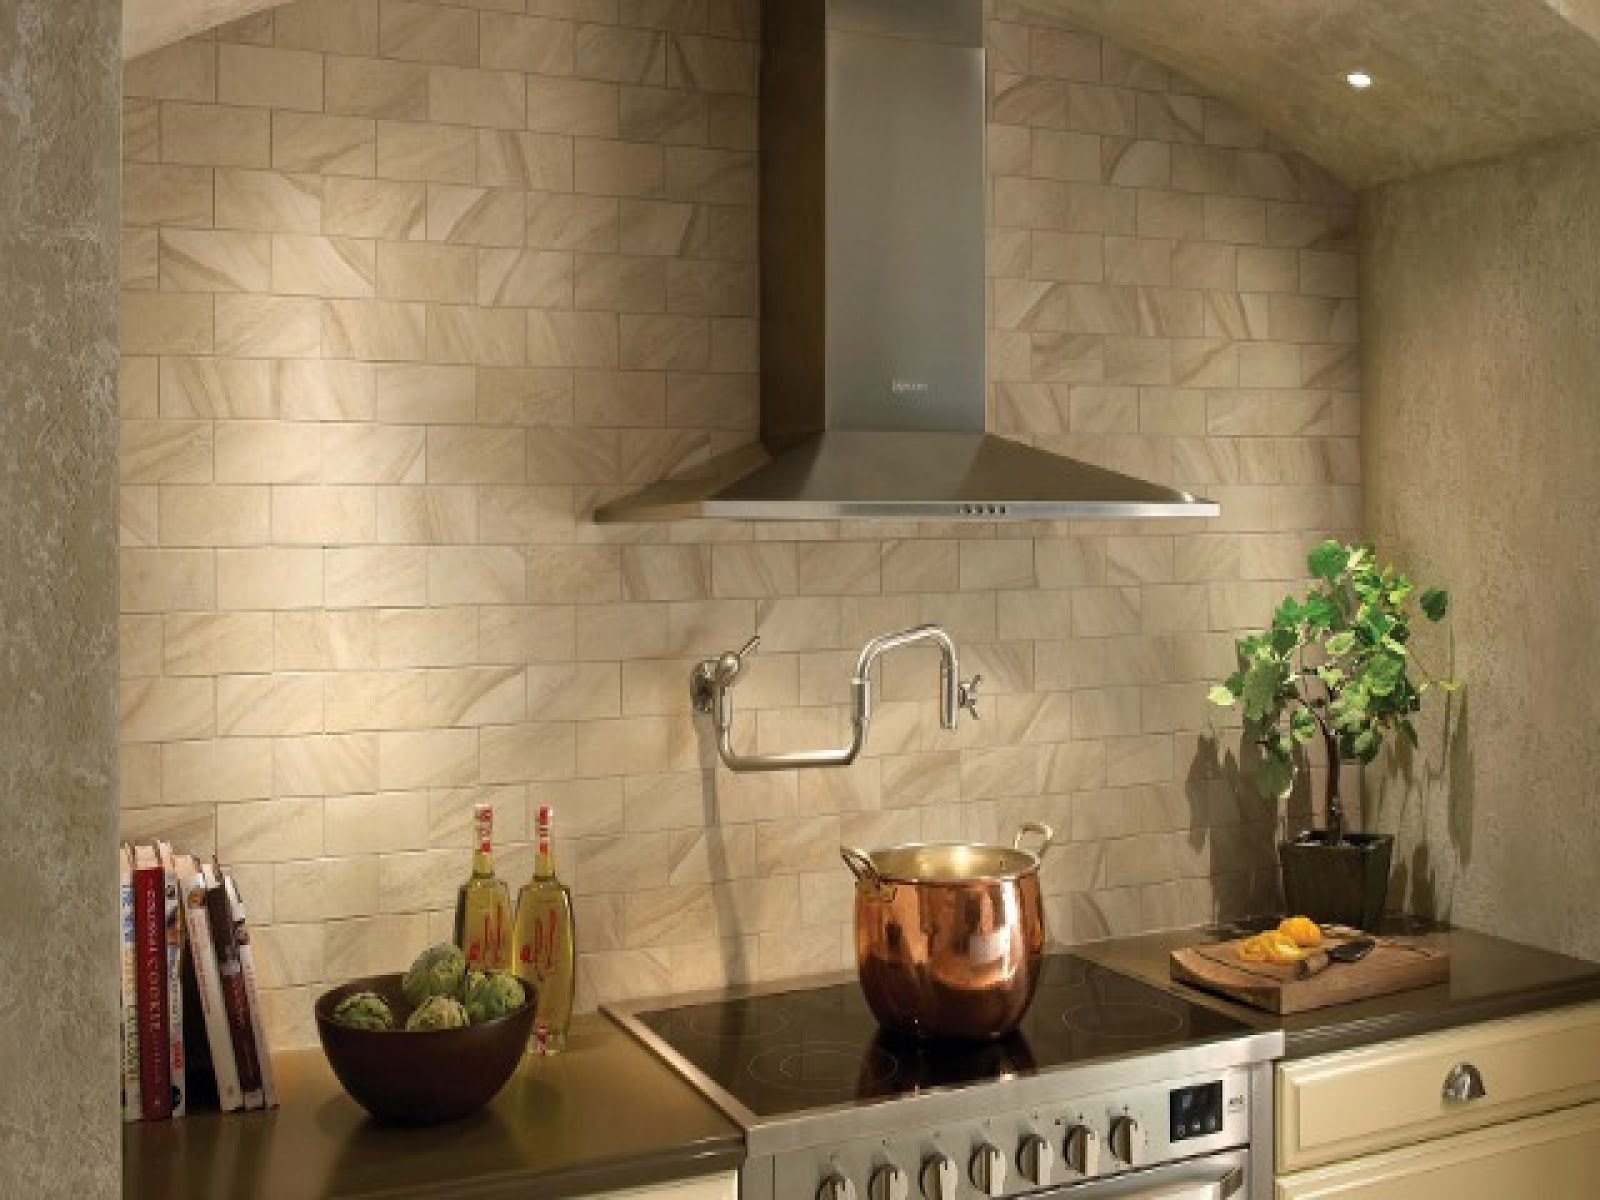  kitchen wall tile design ideas